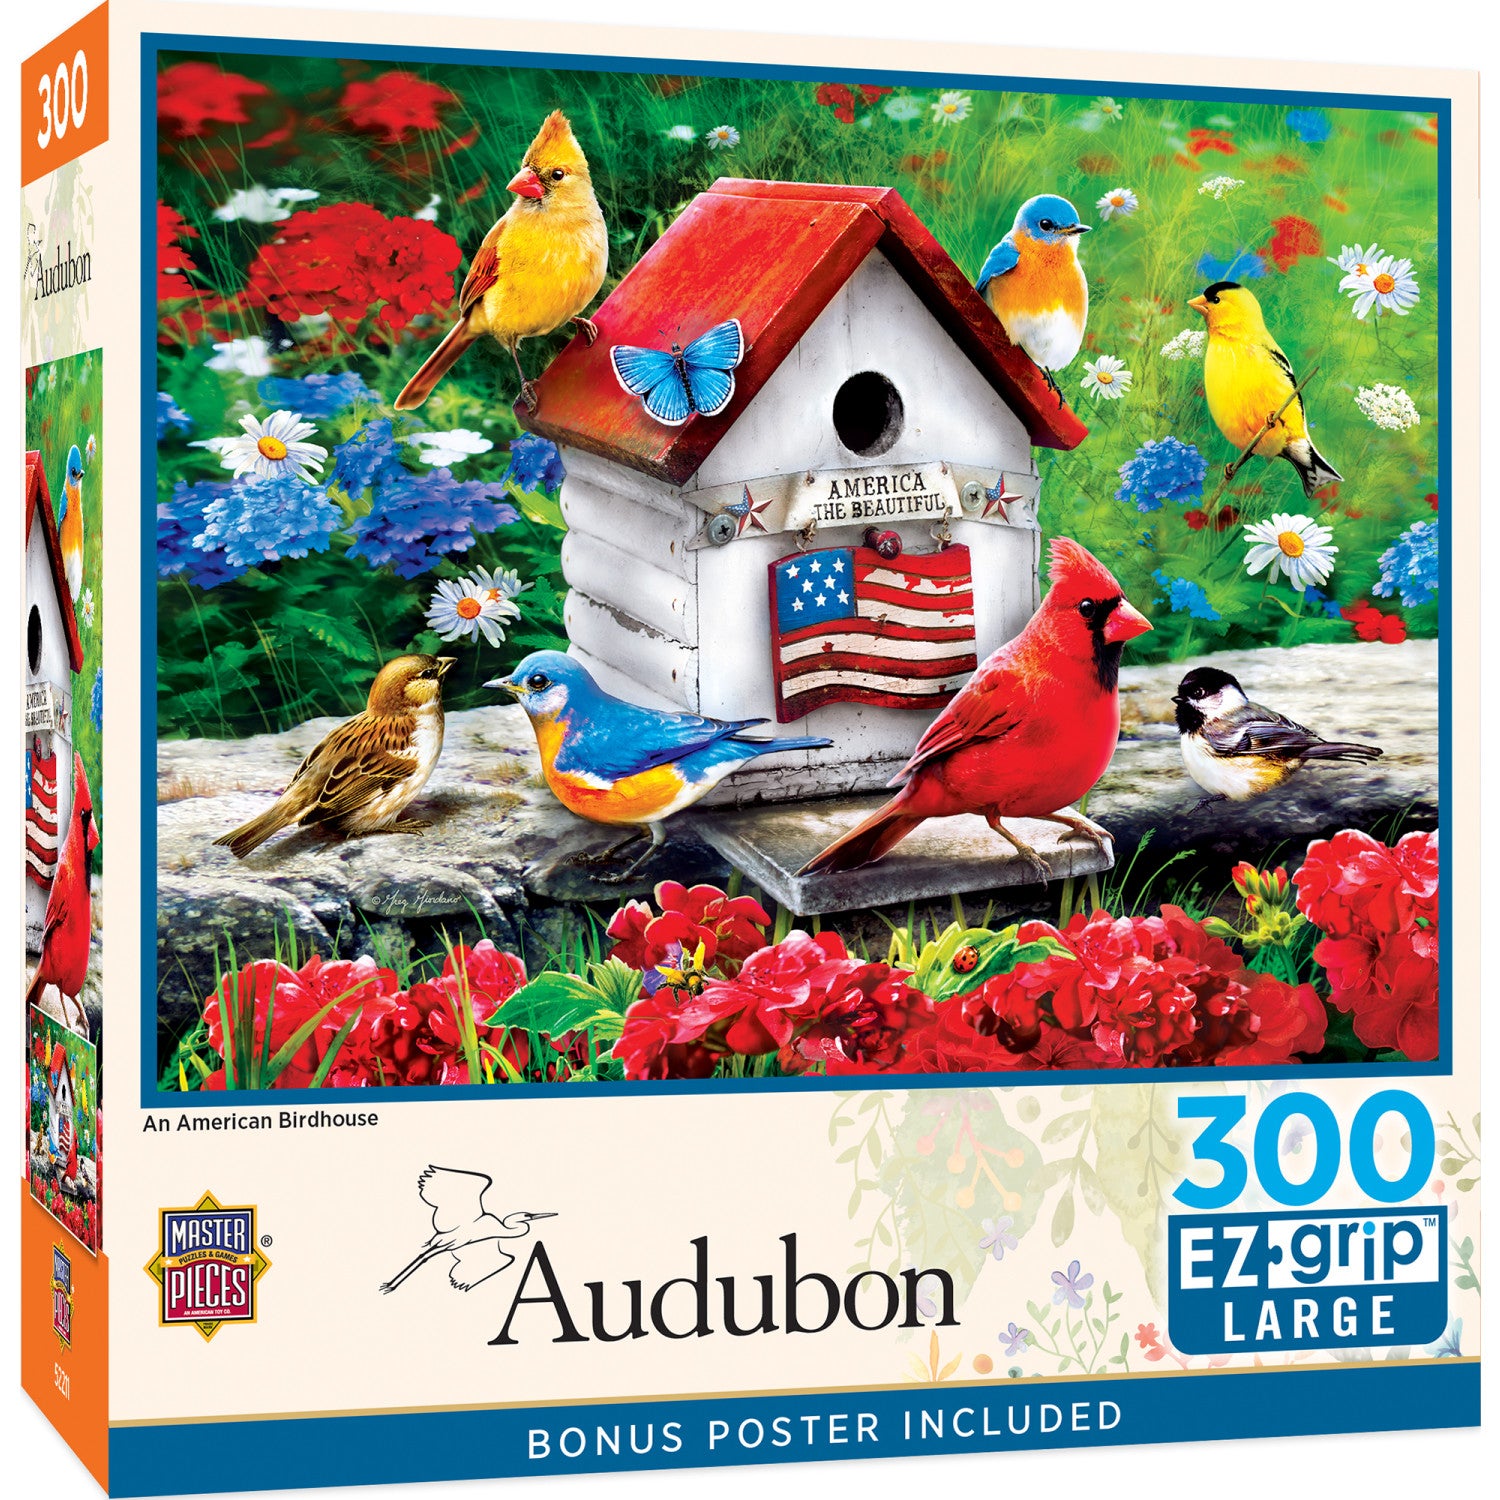 Audubon - An American Birdhouse 300 Piece EZ Grip Jigsaw Puzzle